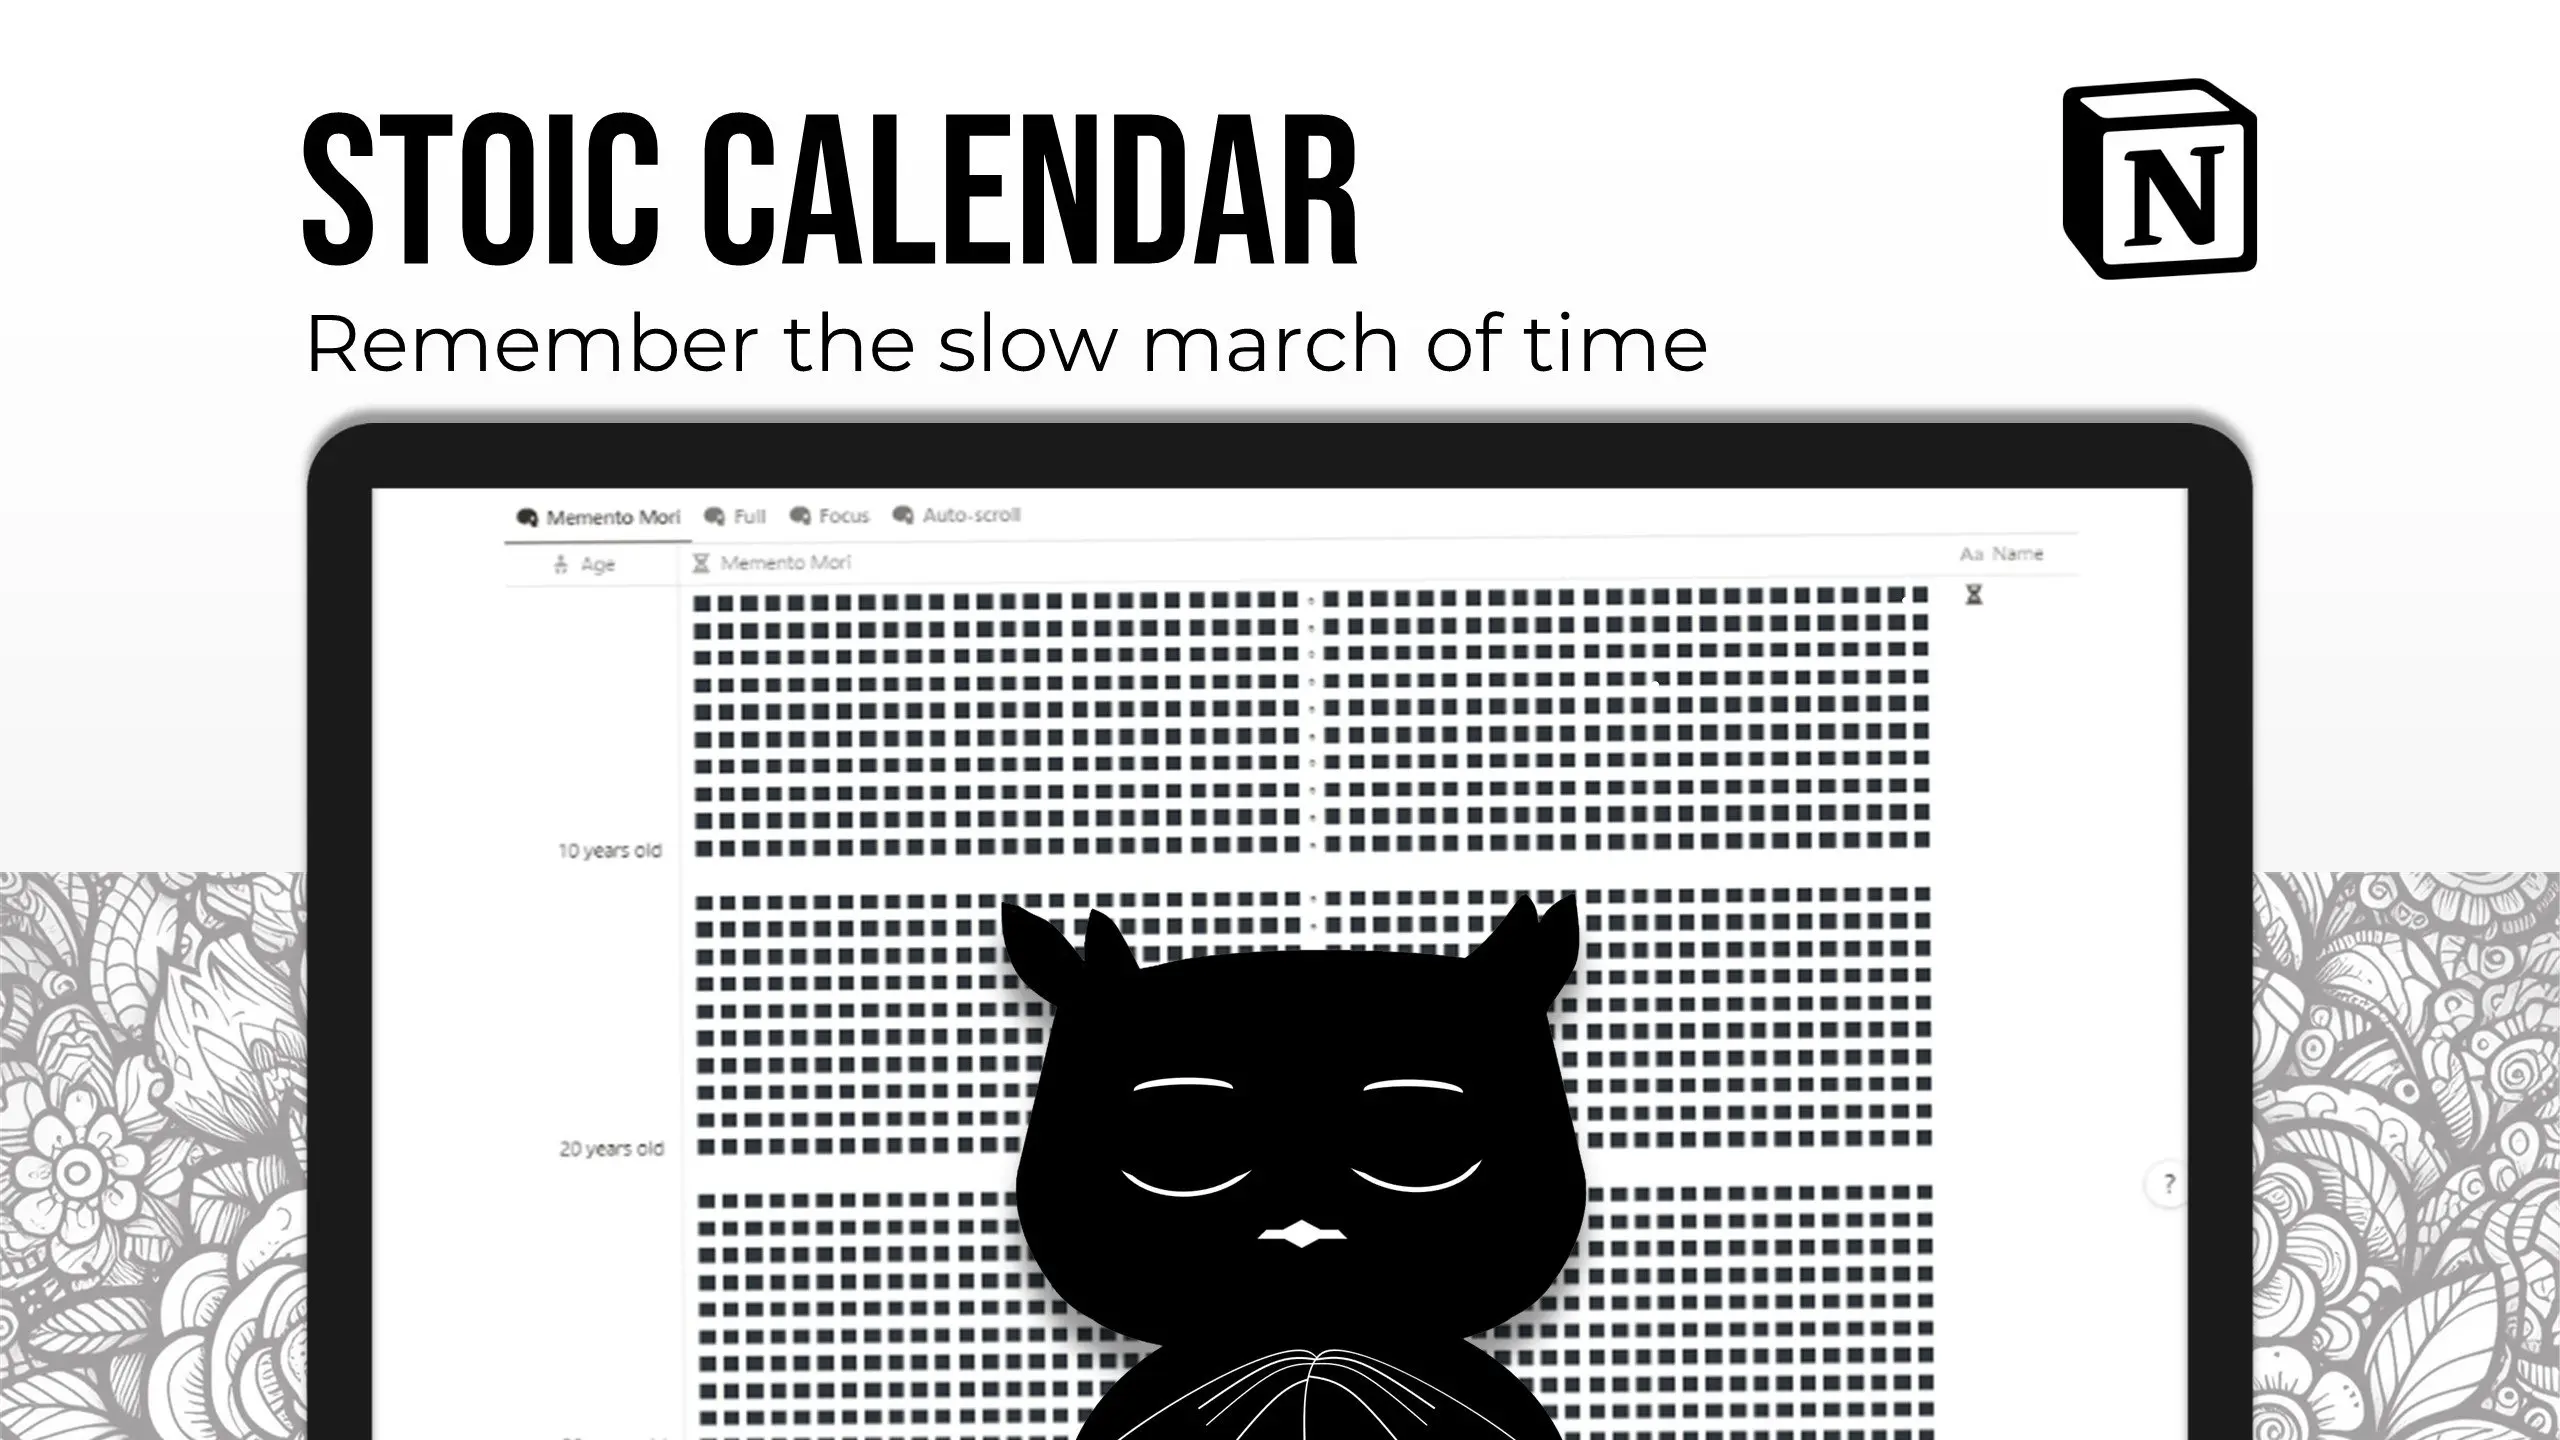 Stoic Calendar image